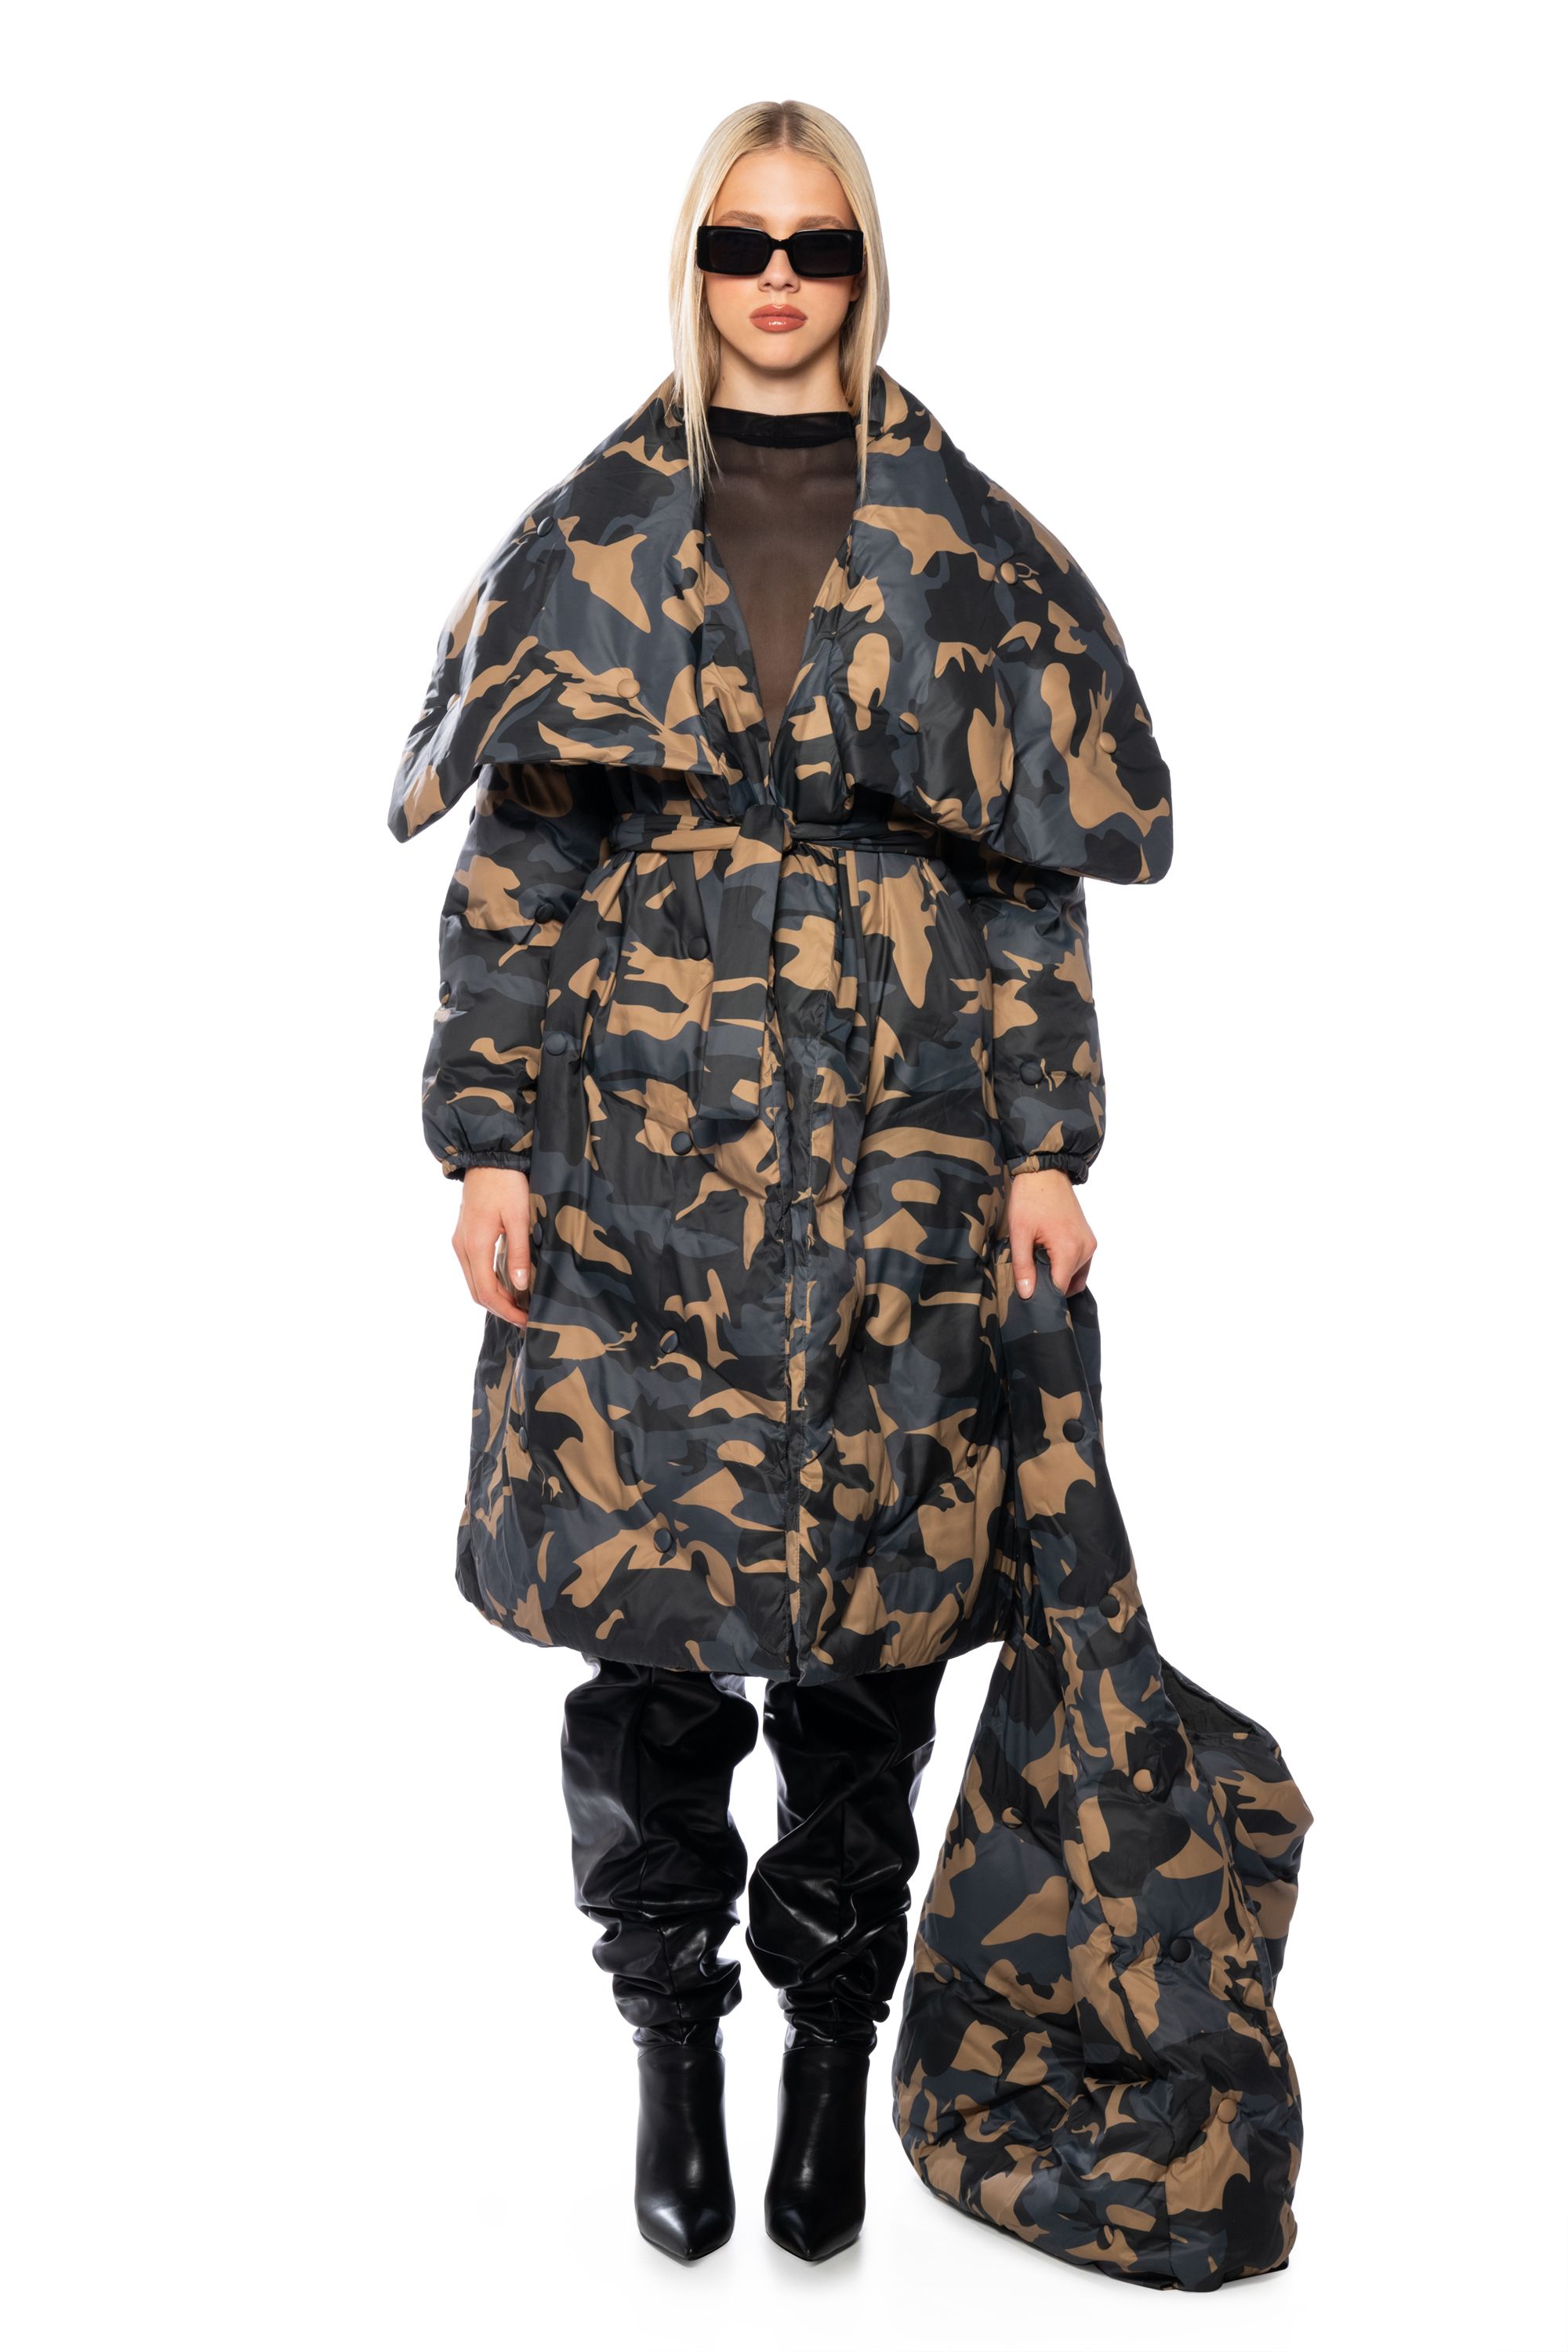 Camouflage Puffer Jackets. Coats & Jackets